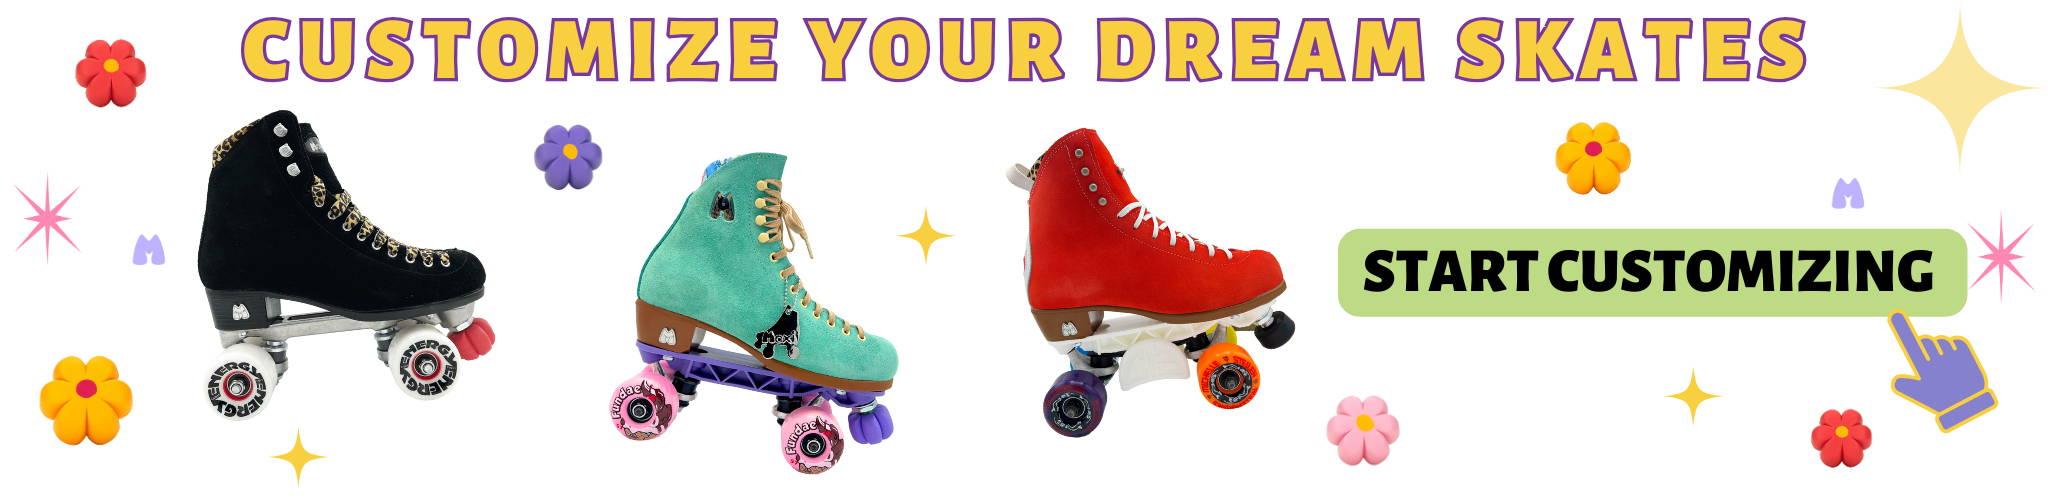 Customize your dream skates. Start customizing